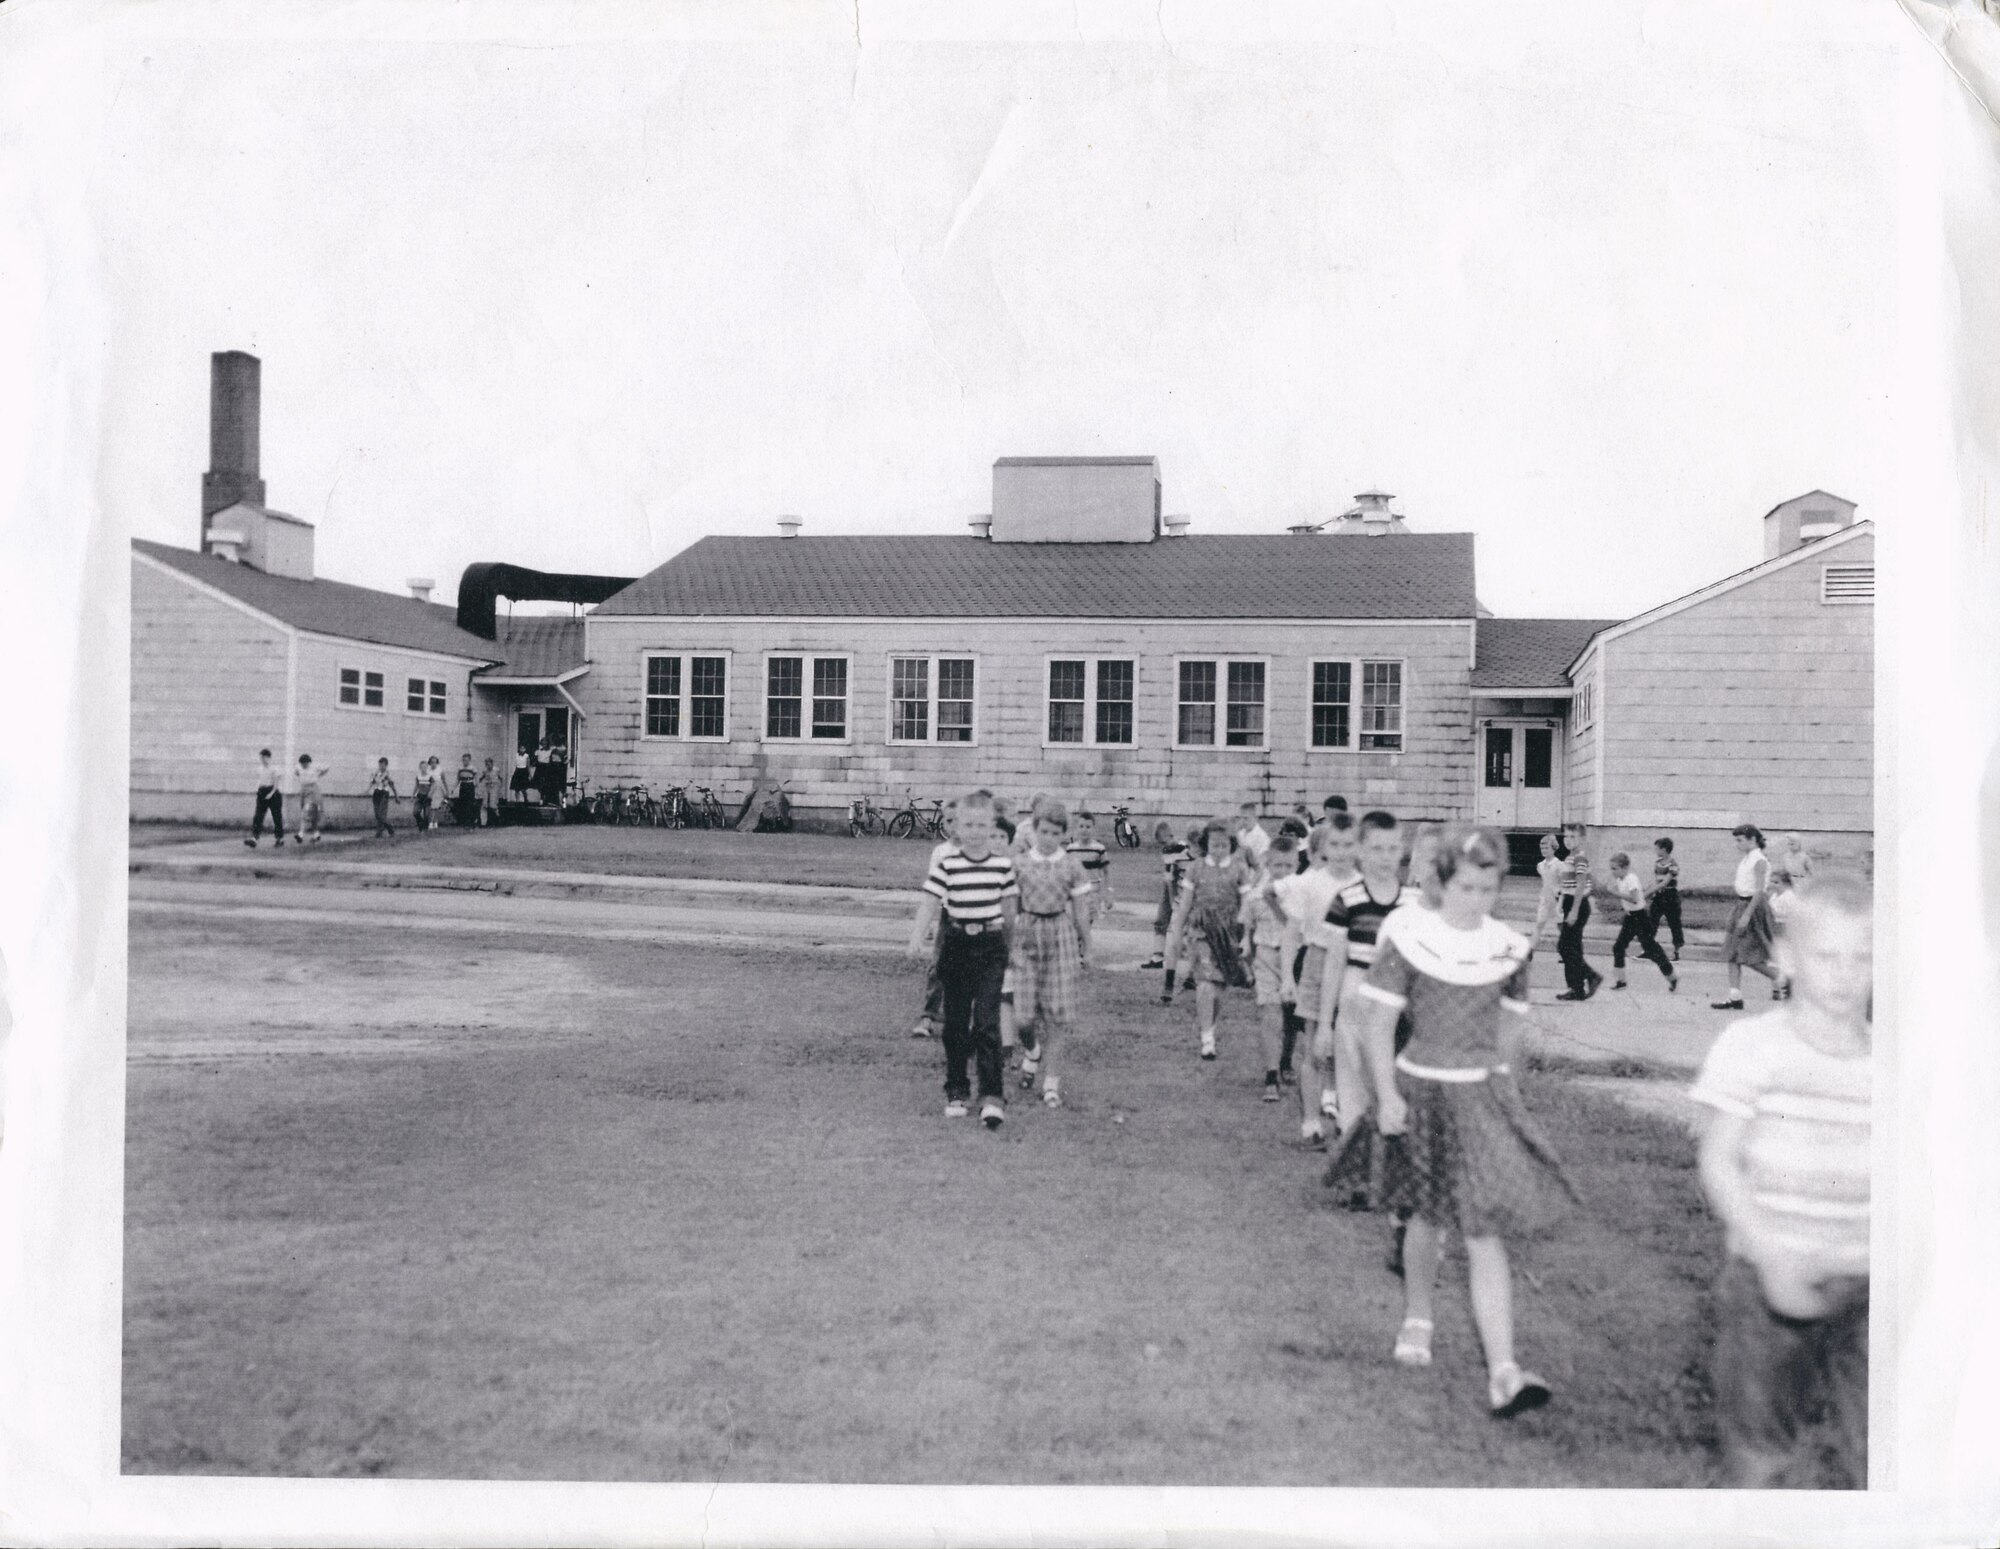 Photo of children in front of Maxwell Elementary School in 1956.